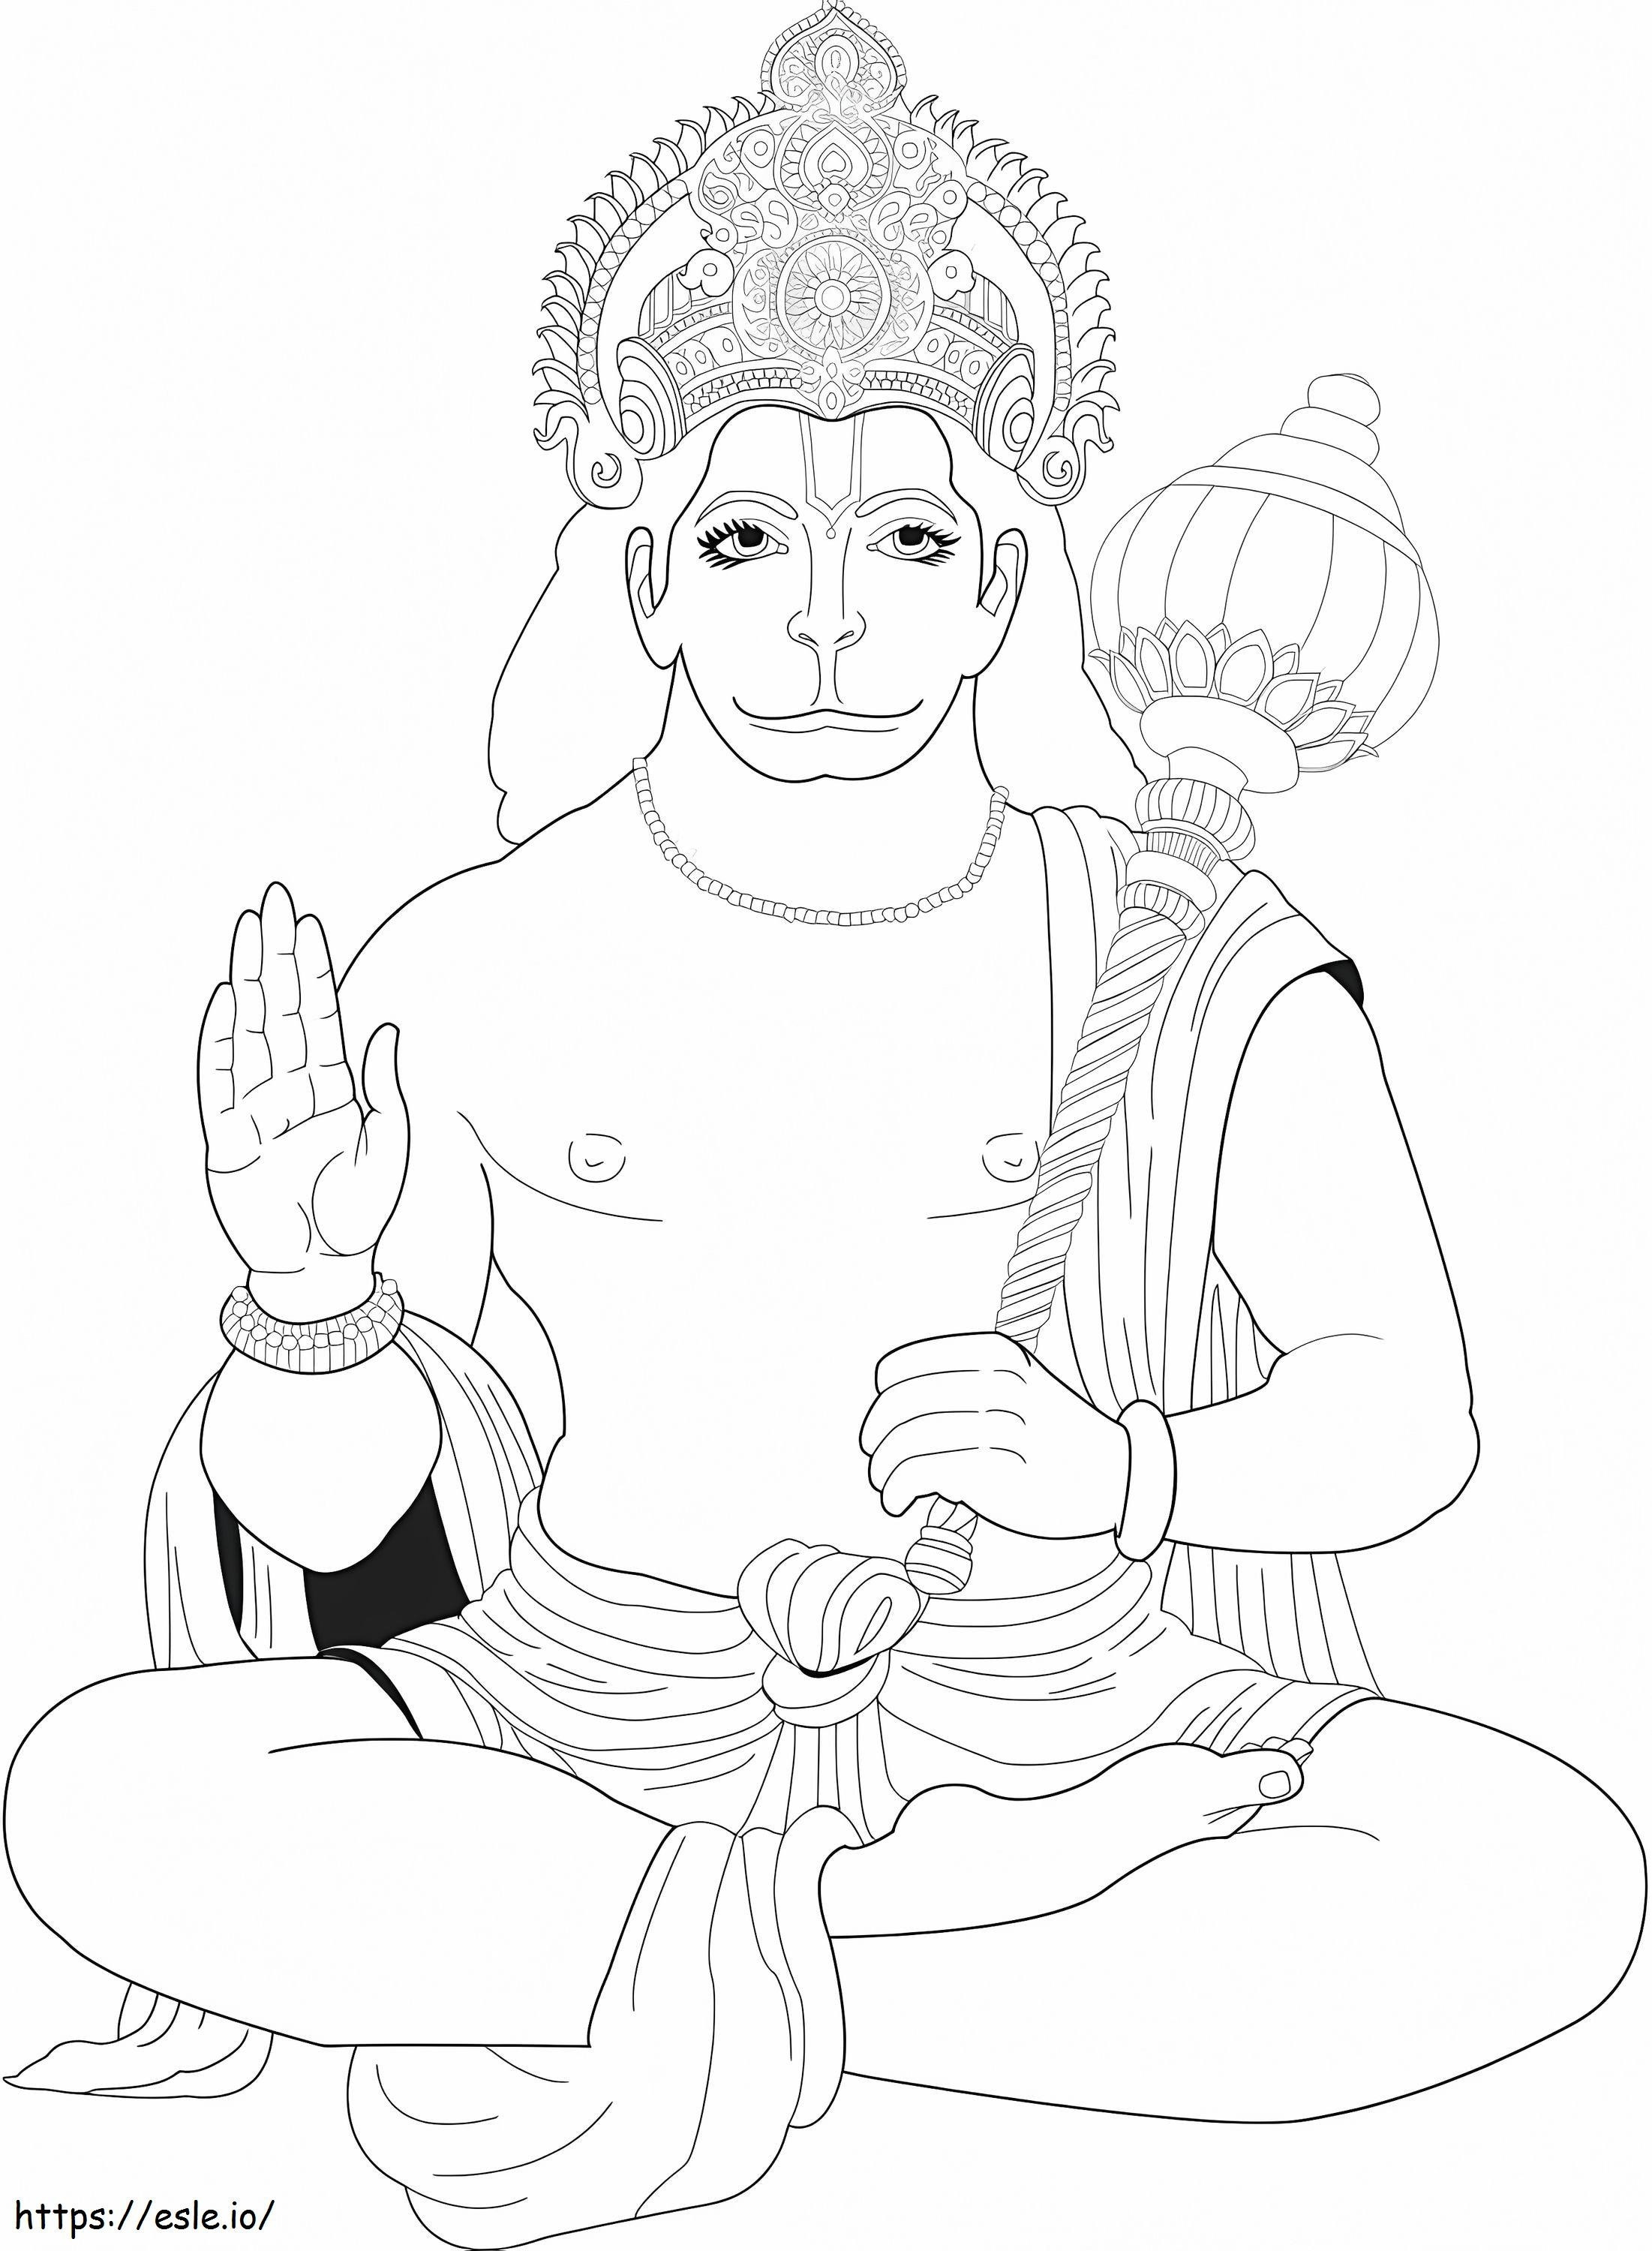 Hanuman Jayanti coloring page